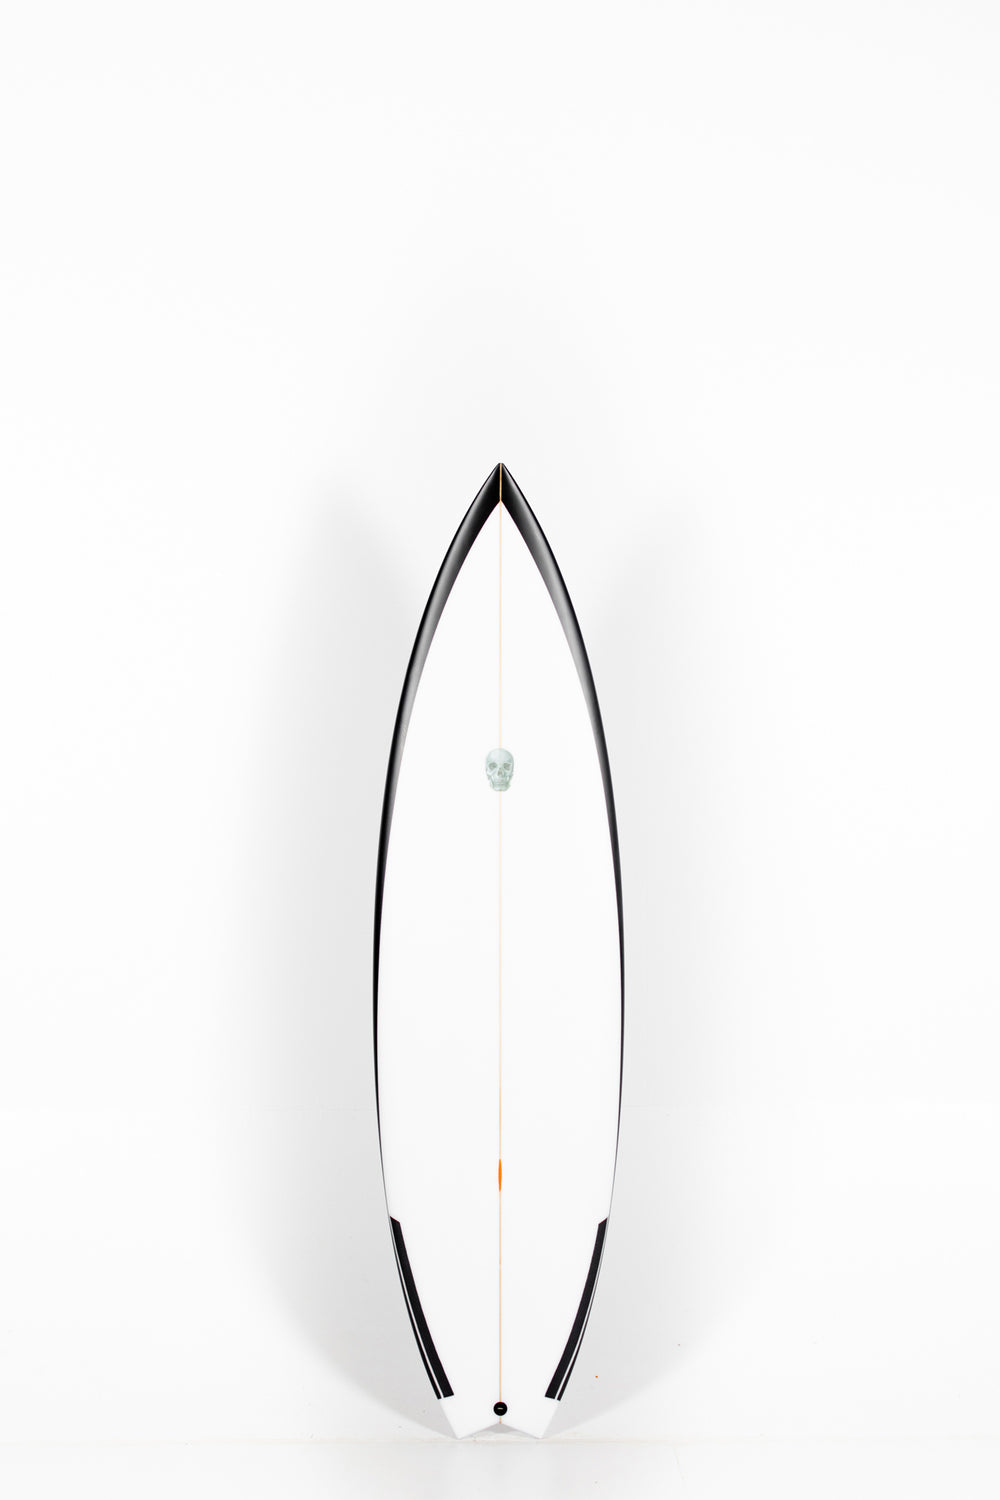 Pukas Surf Shop - Christenson Surfboard  - GERR by Chris Christenson - 6’2” x 19 1/2 x 2 1/2 - CX03370